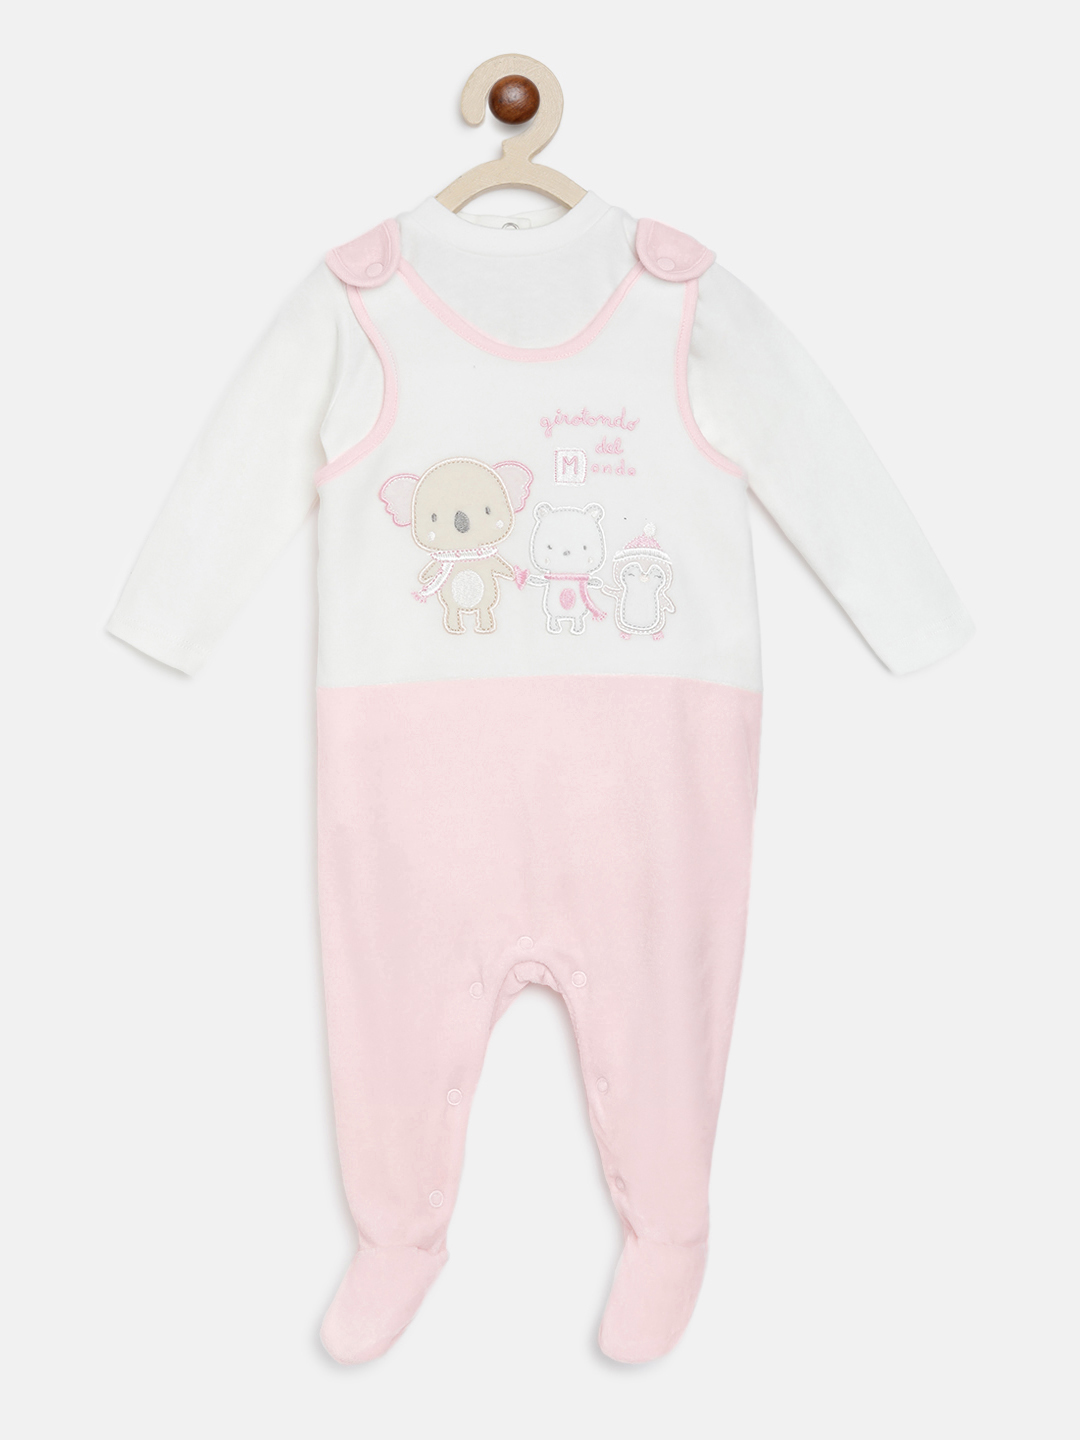 Infants Applique Babysuit-Bodysuit Set-Pink